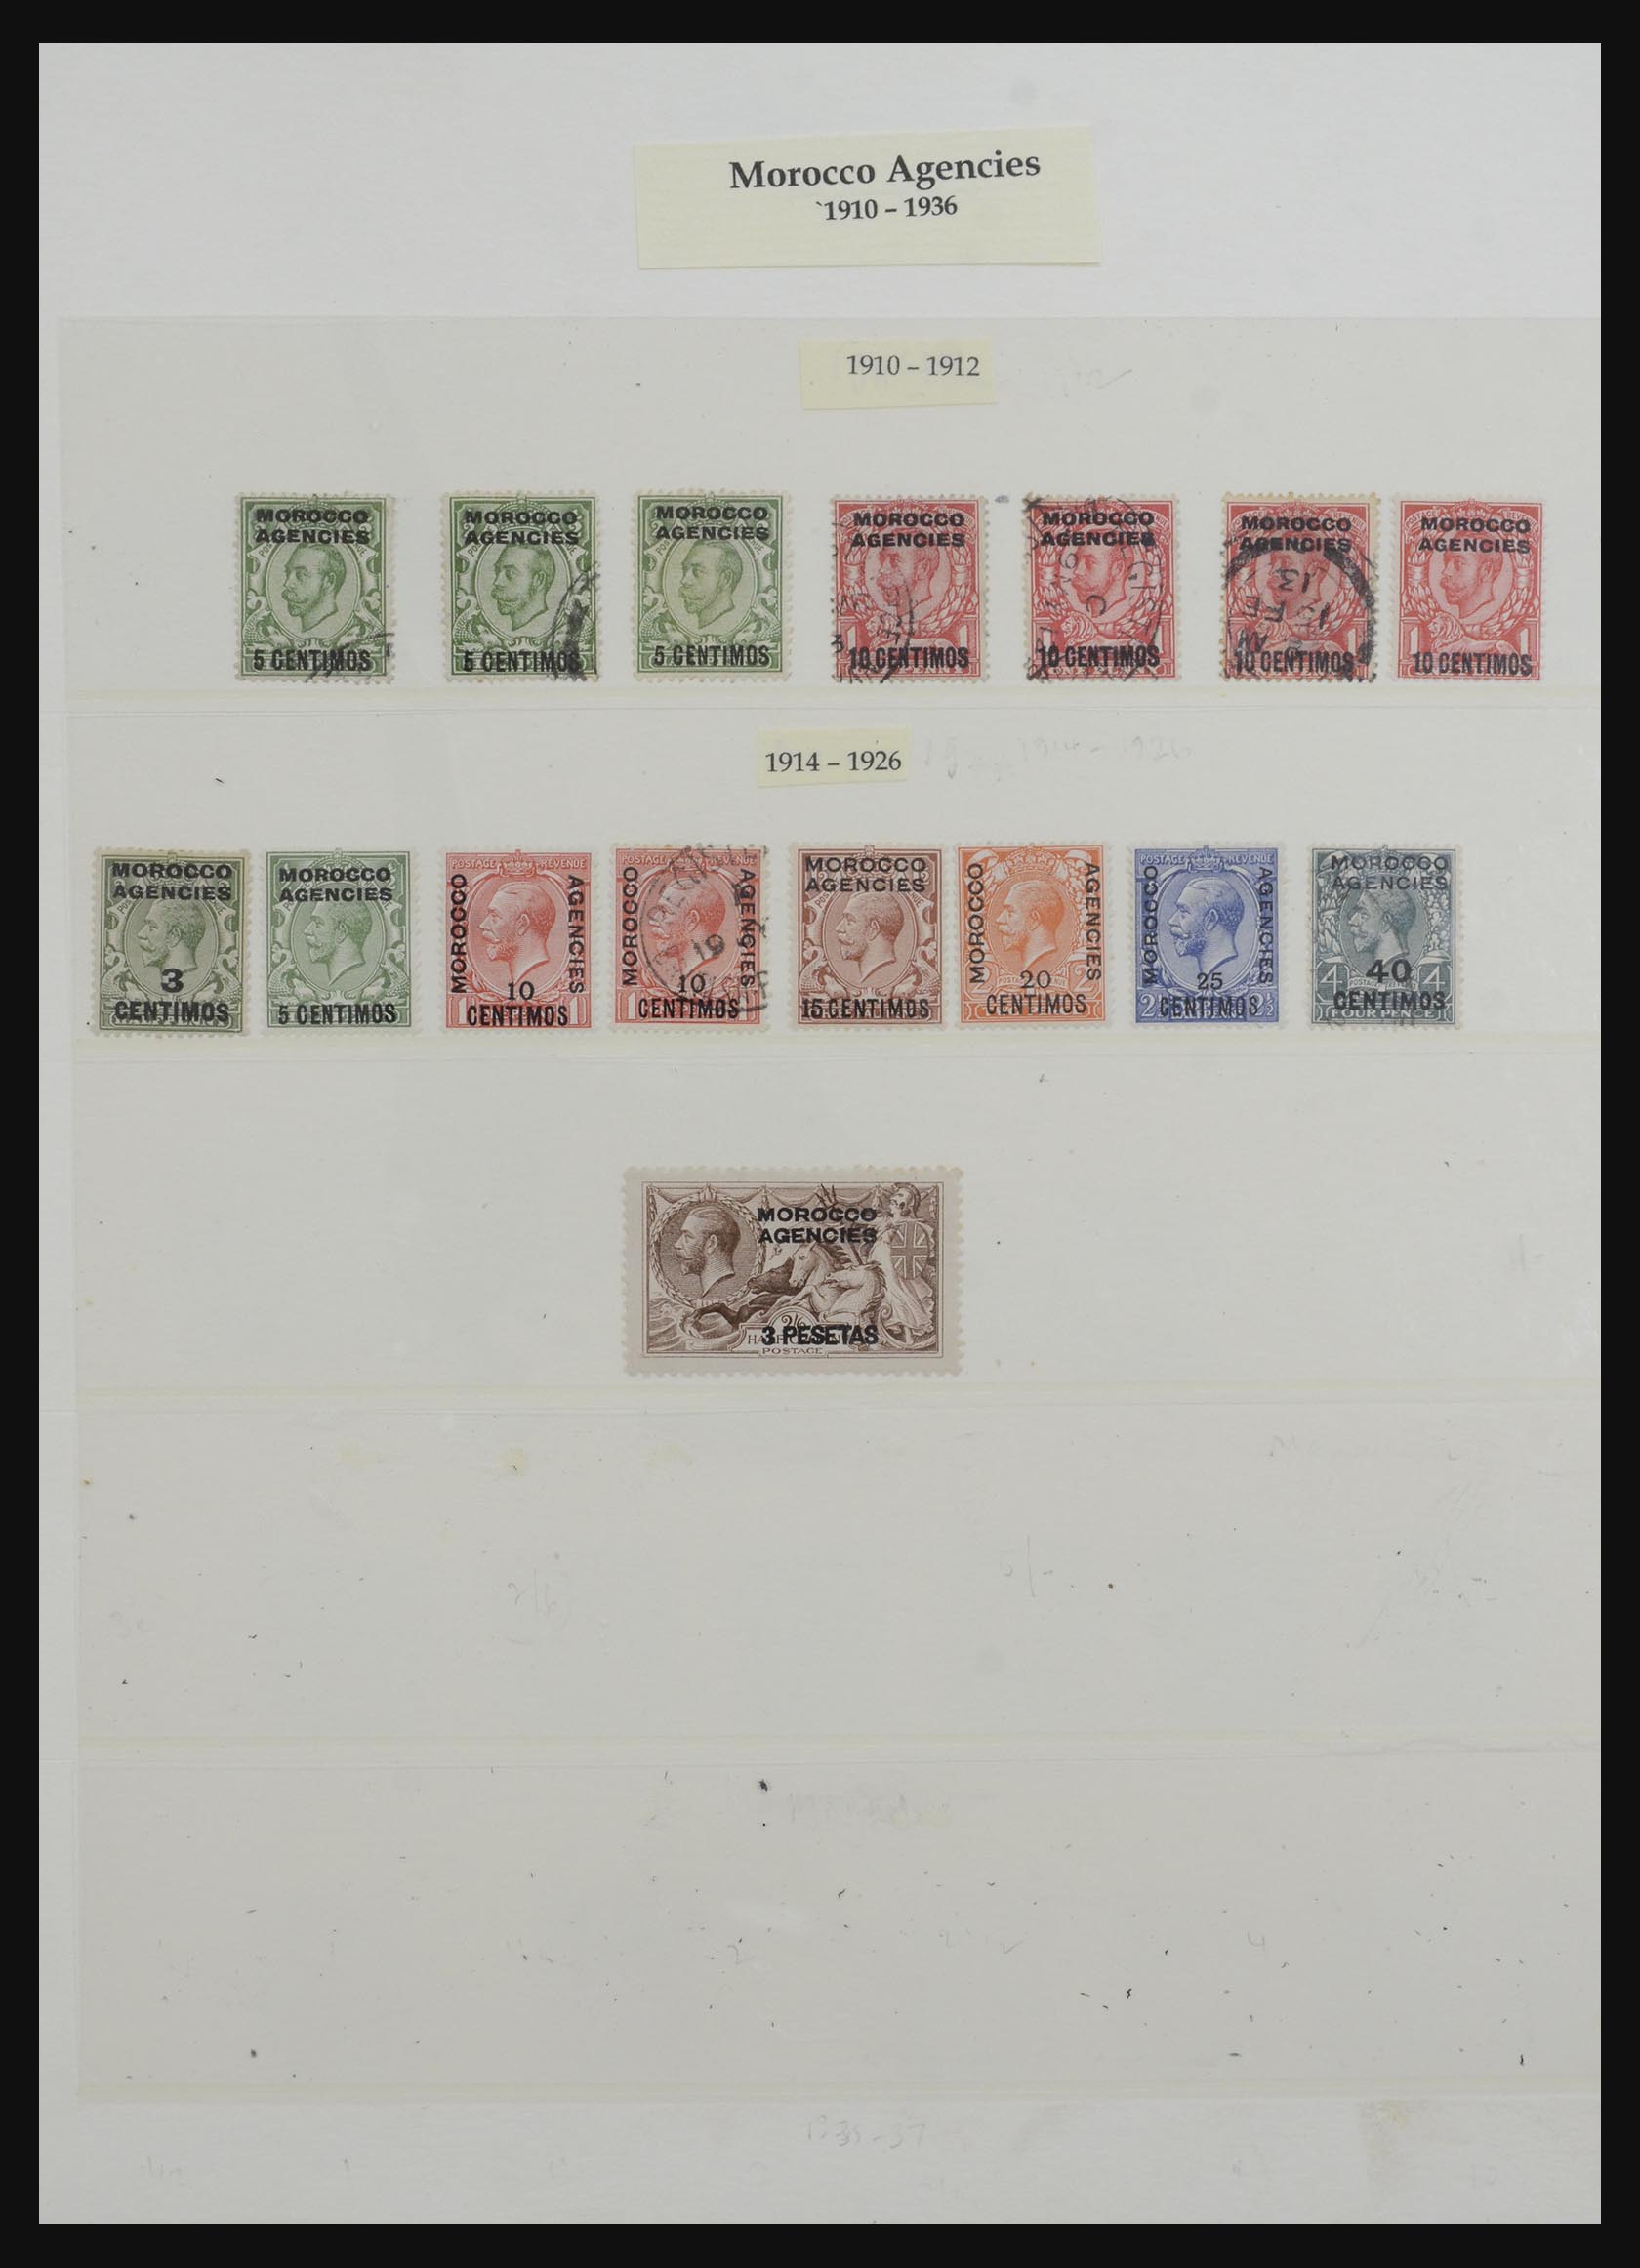 32228 025 - 32228 British Levant and Morocco agencies 1857-1952.